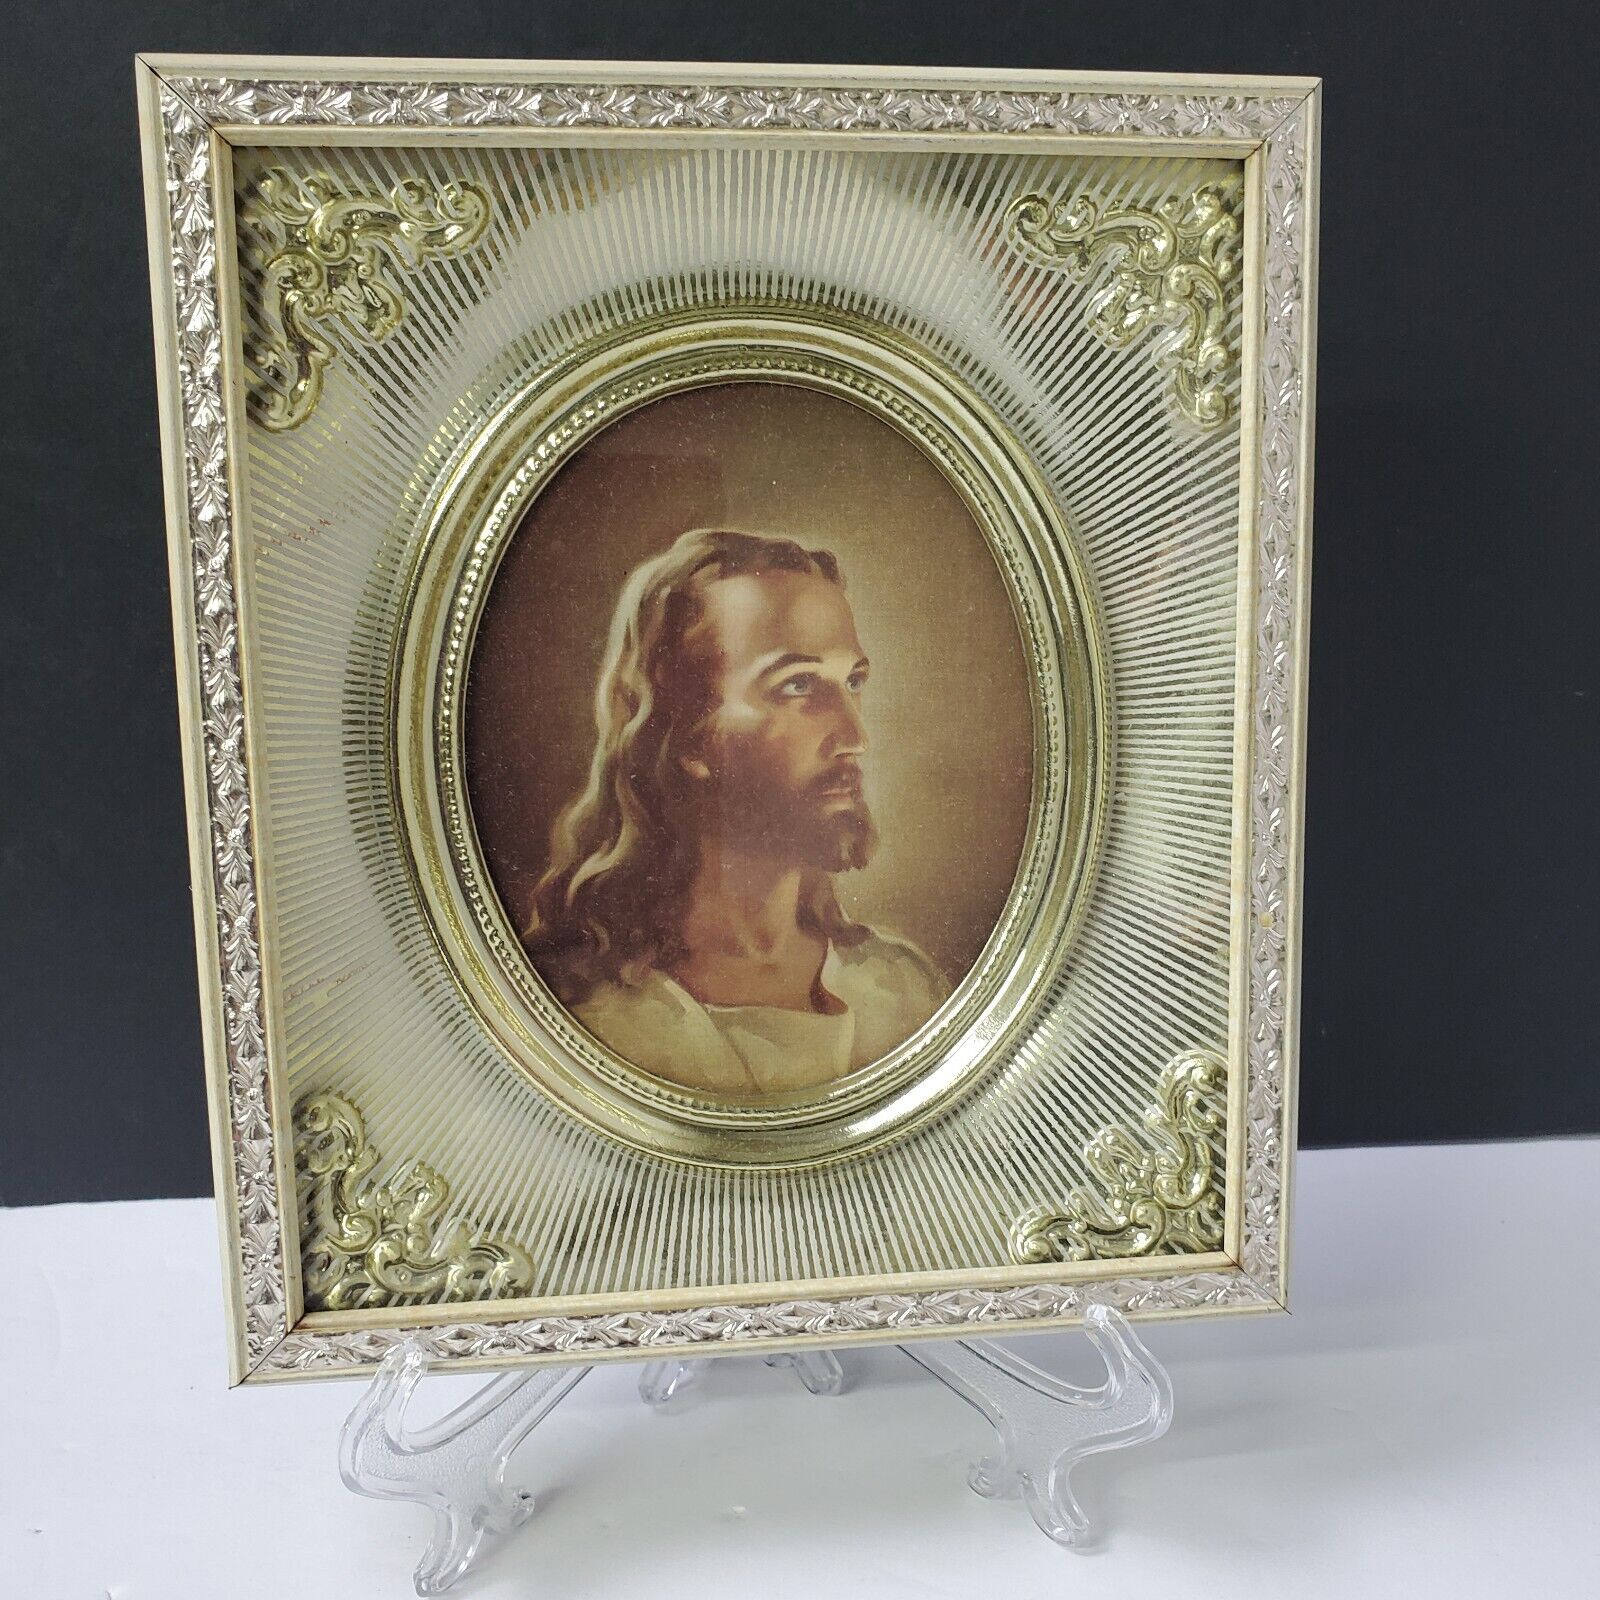 Vintage Head of Christ Shadow Box Wall Art Gold Ornate Framed Catholic Religious